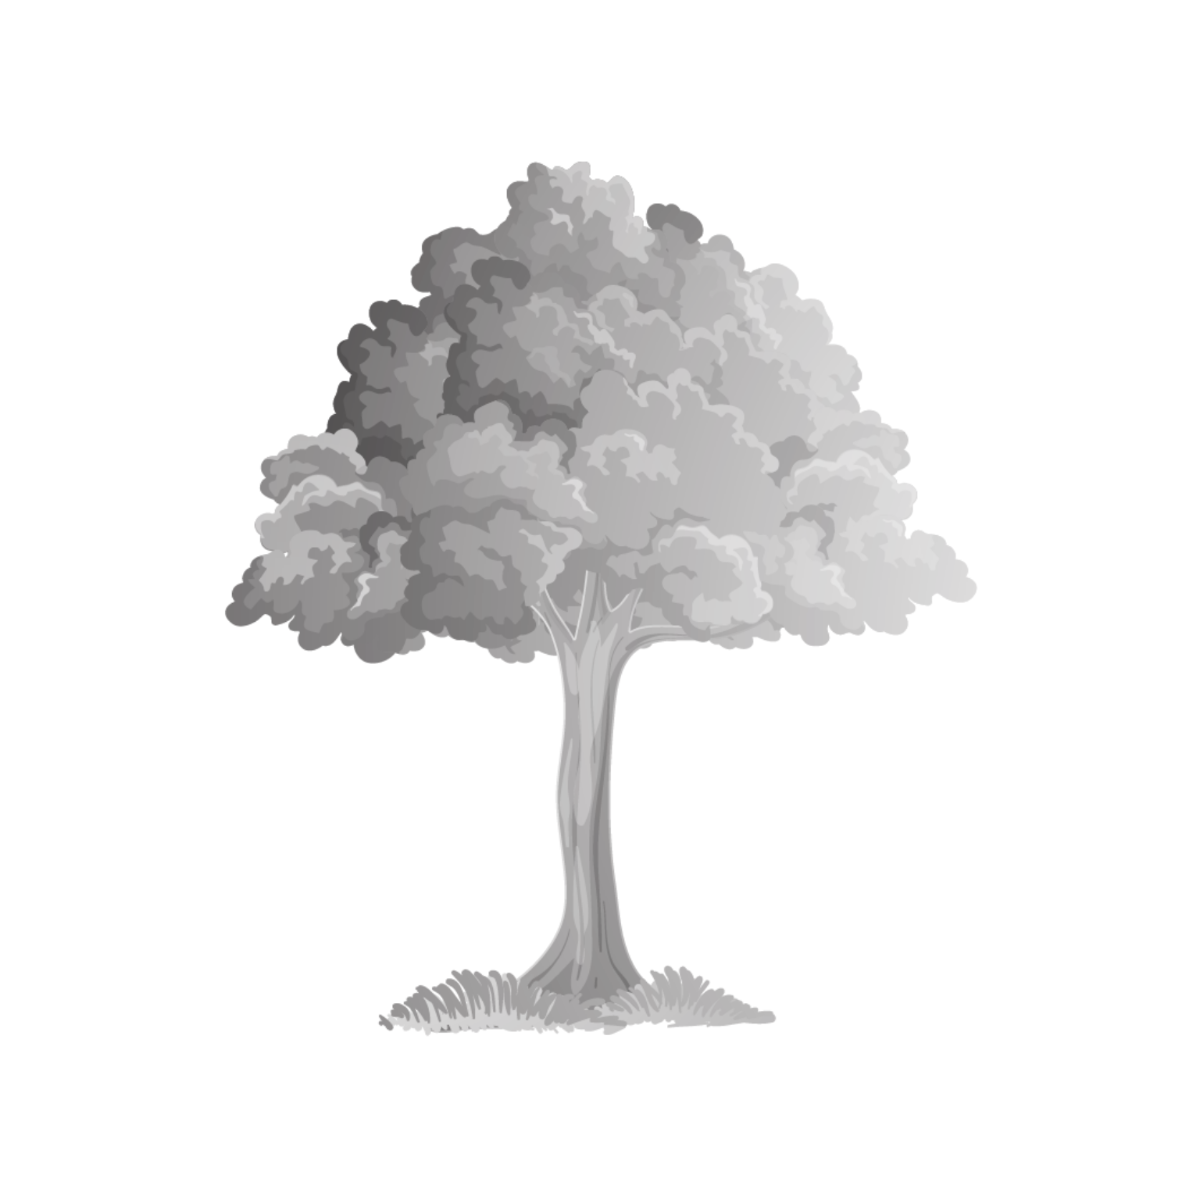 Transparent Tree Vector